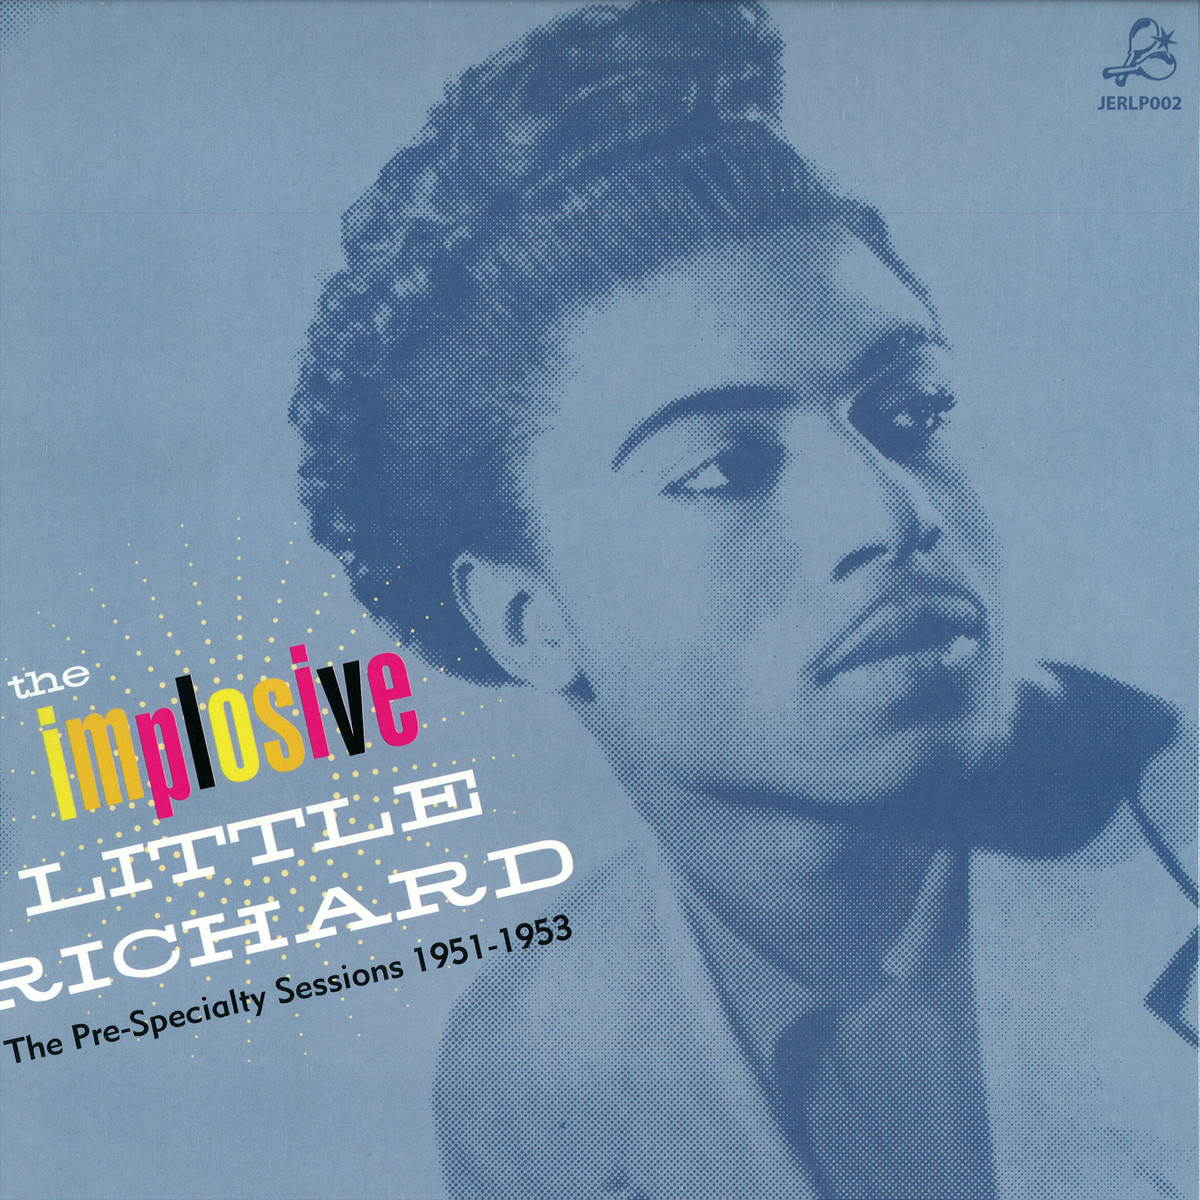 Виниловые пластинки little Richard ,the Specialty sessions. Фотоальбомов little Richard. Little Richard винил на Антропе.